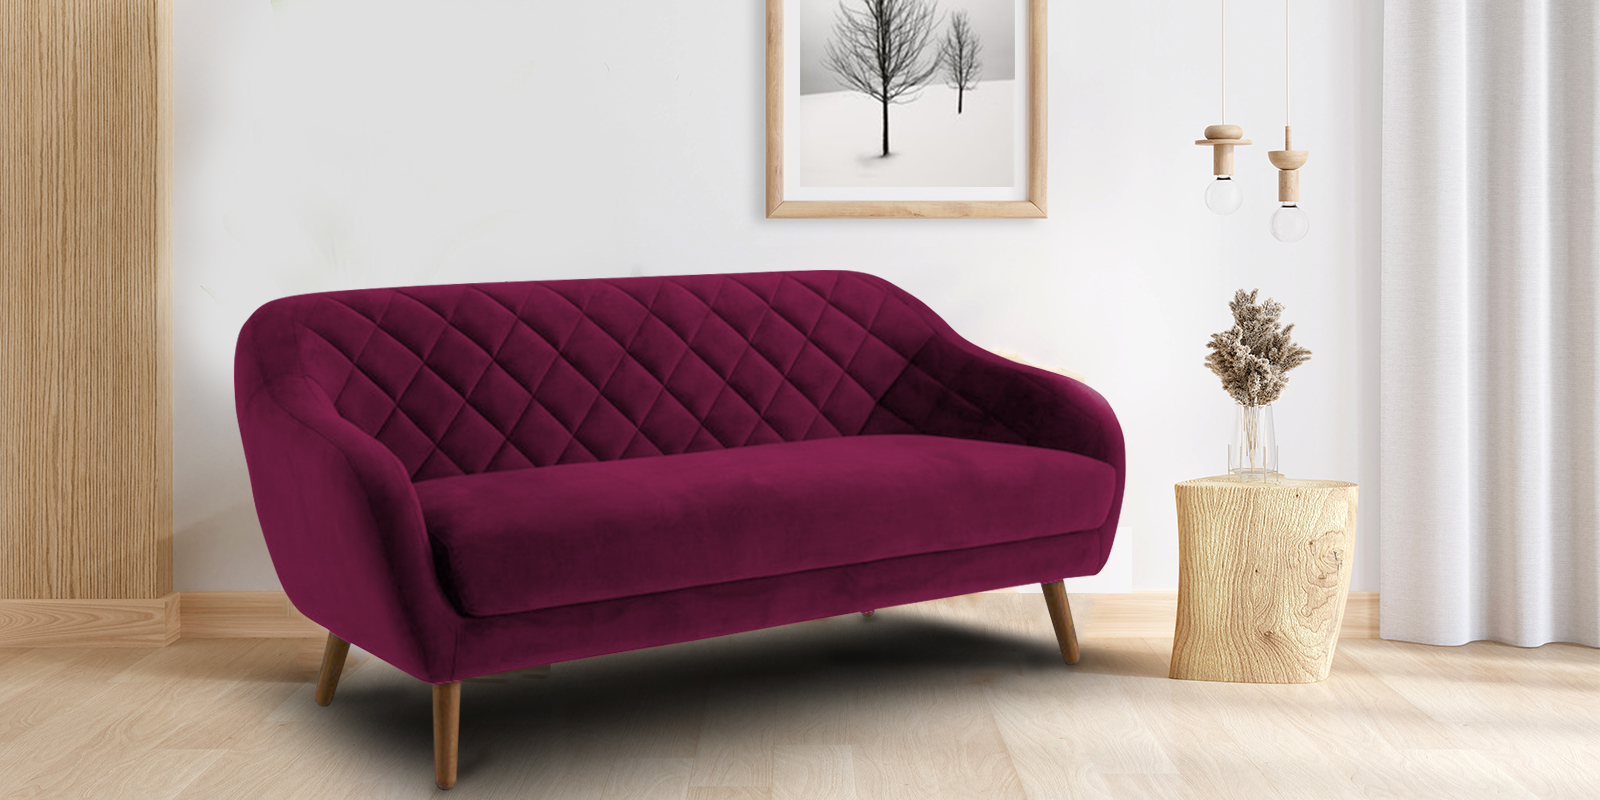 Pleasant Three Seater Sofa in Dark Pink colour - Dreamzz Furniture ...